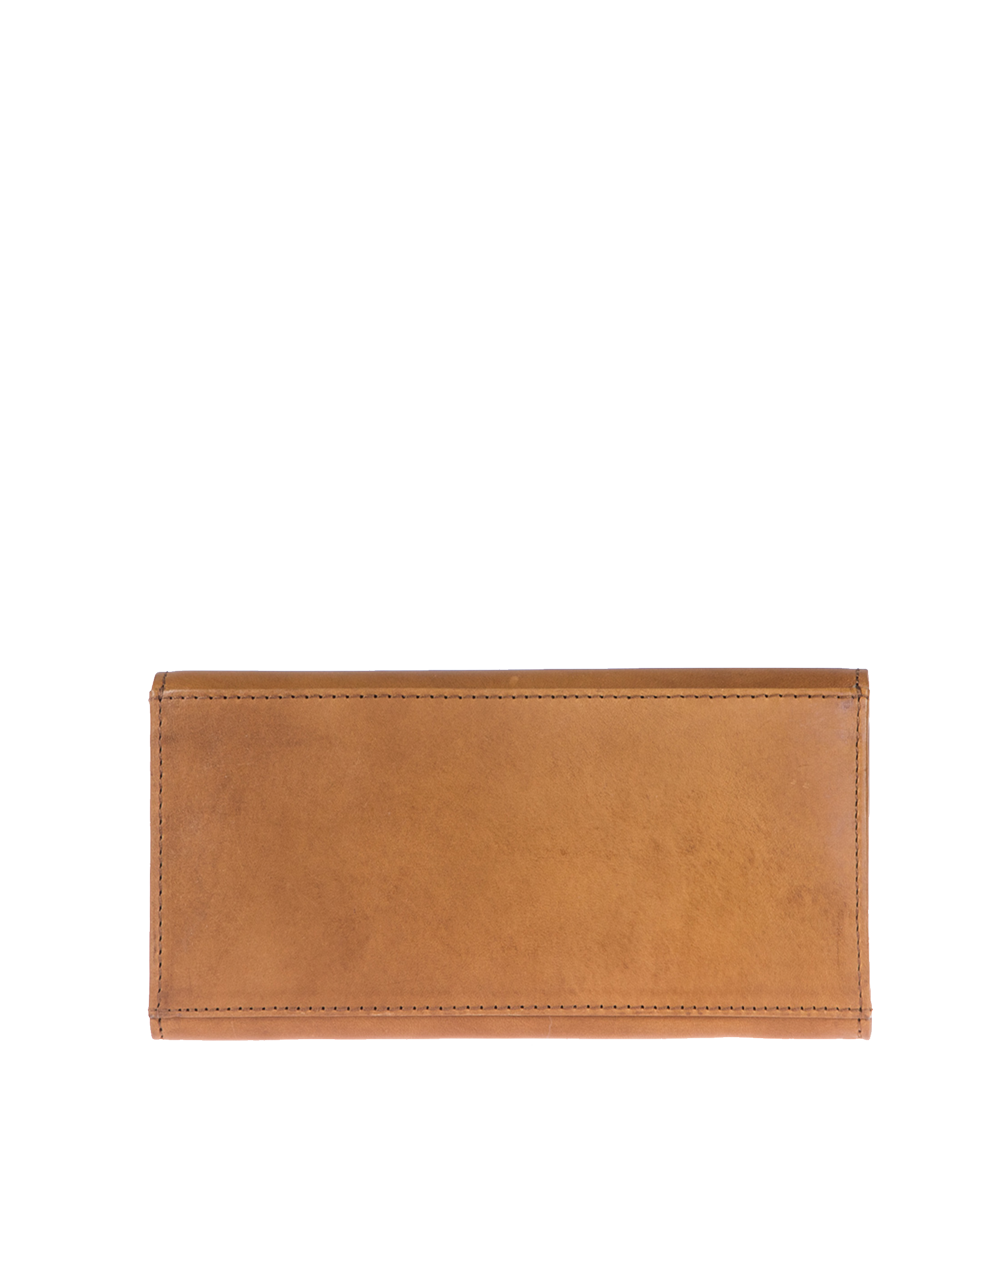 ENVELOPE PIXIE wallet⎜Camel classic leather